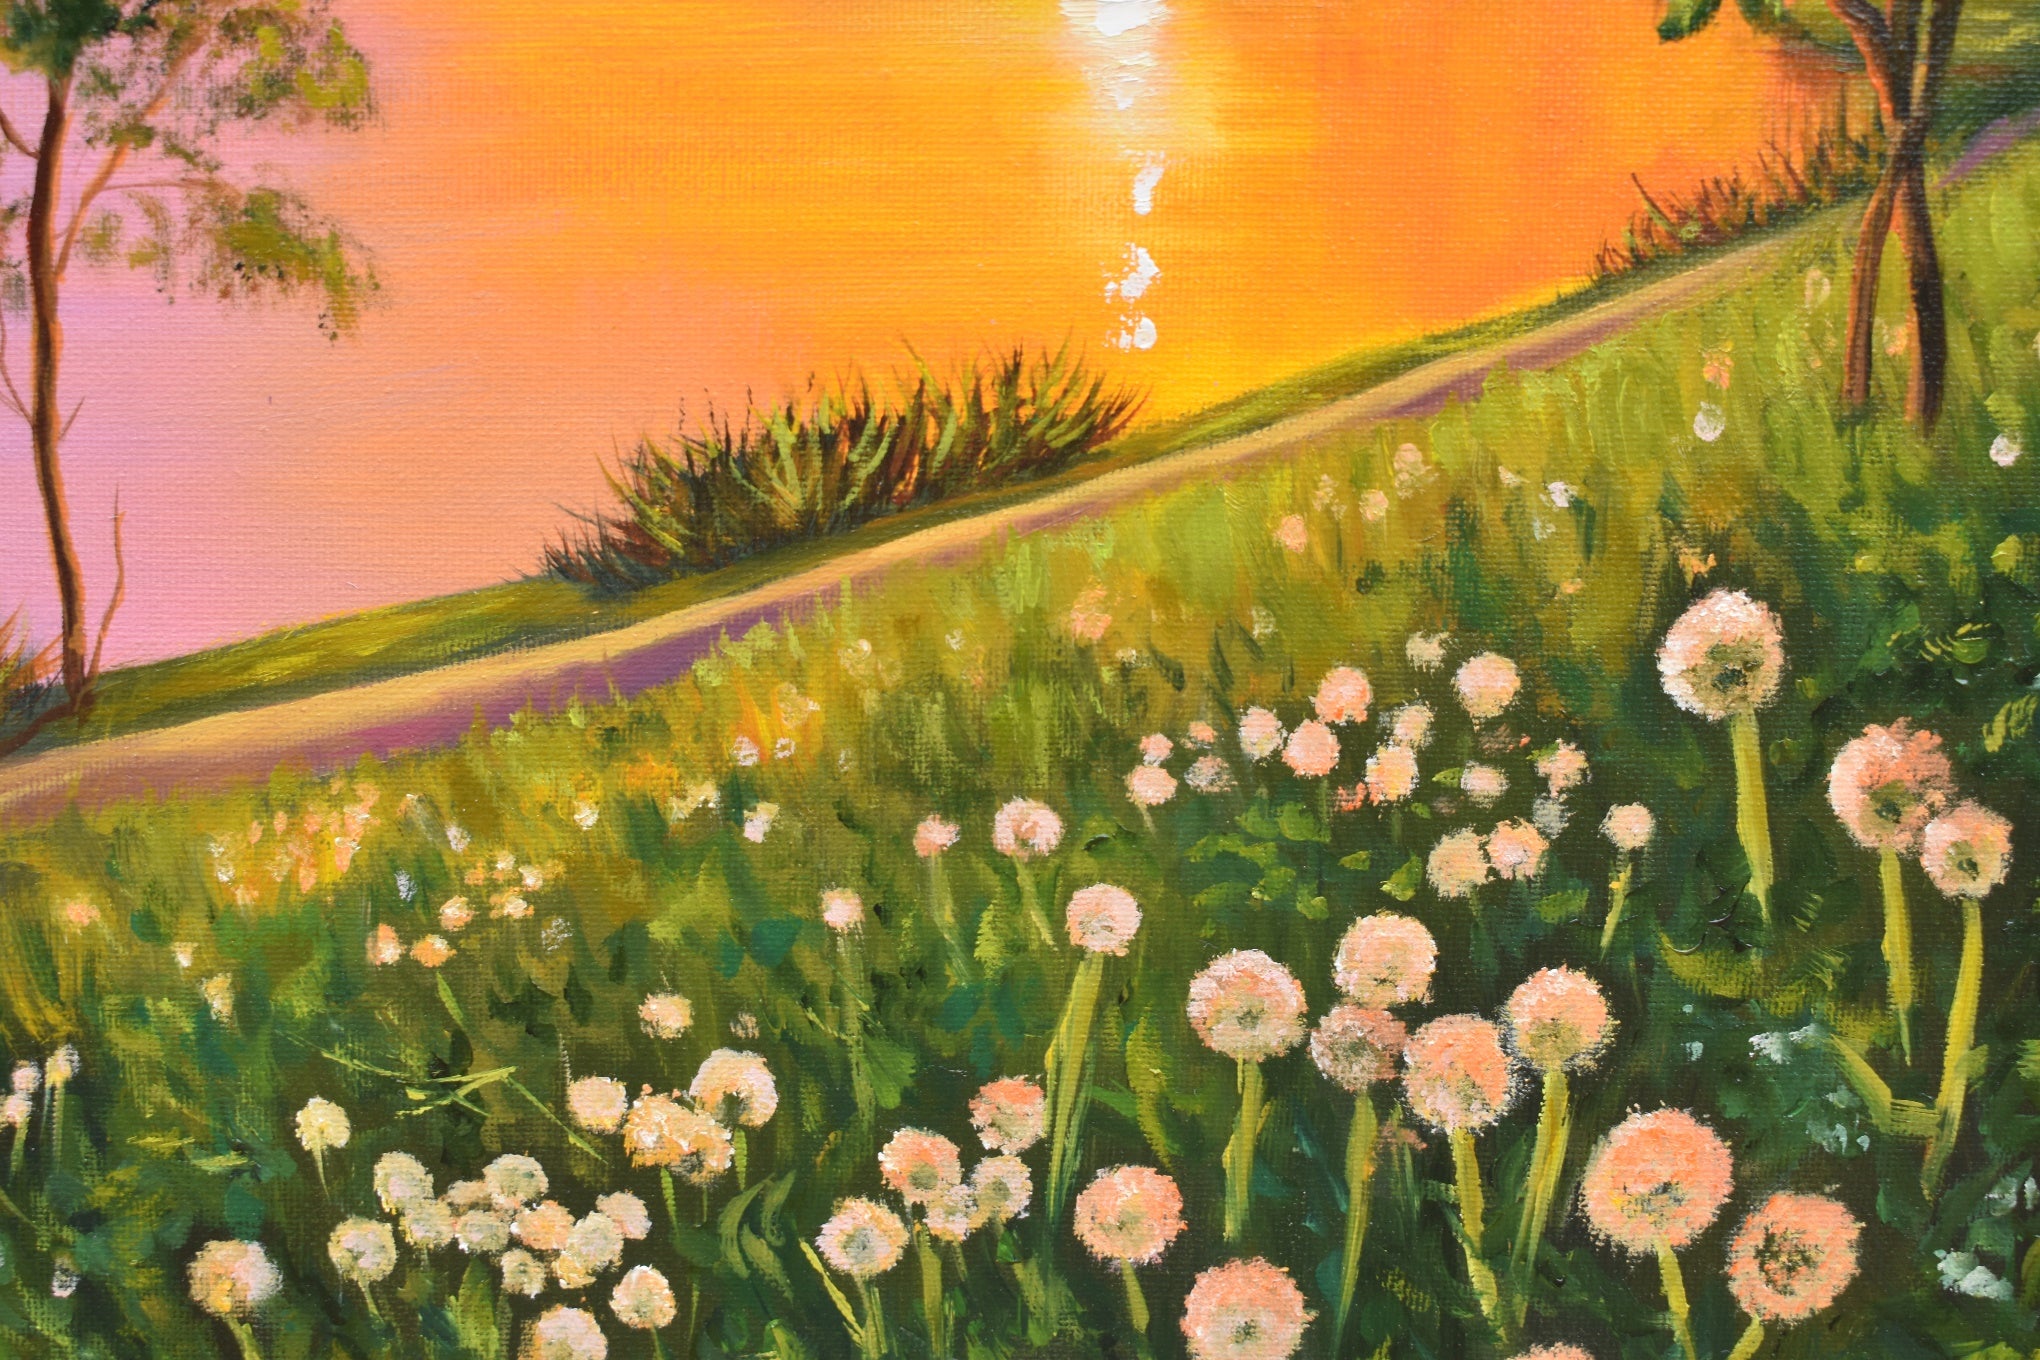 Dandelions at Sunset (SOLD)